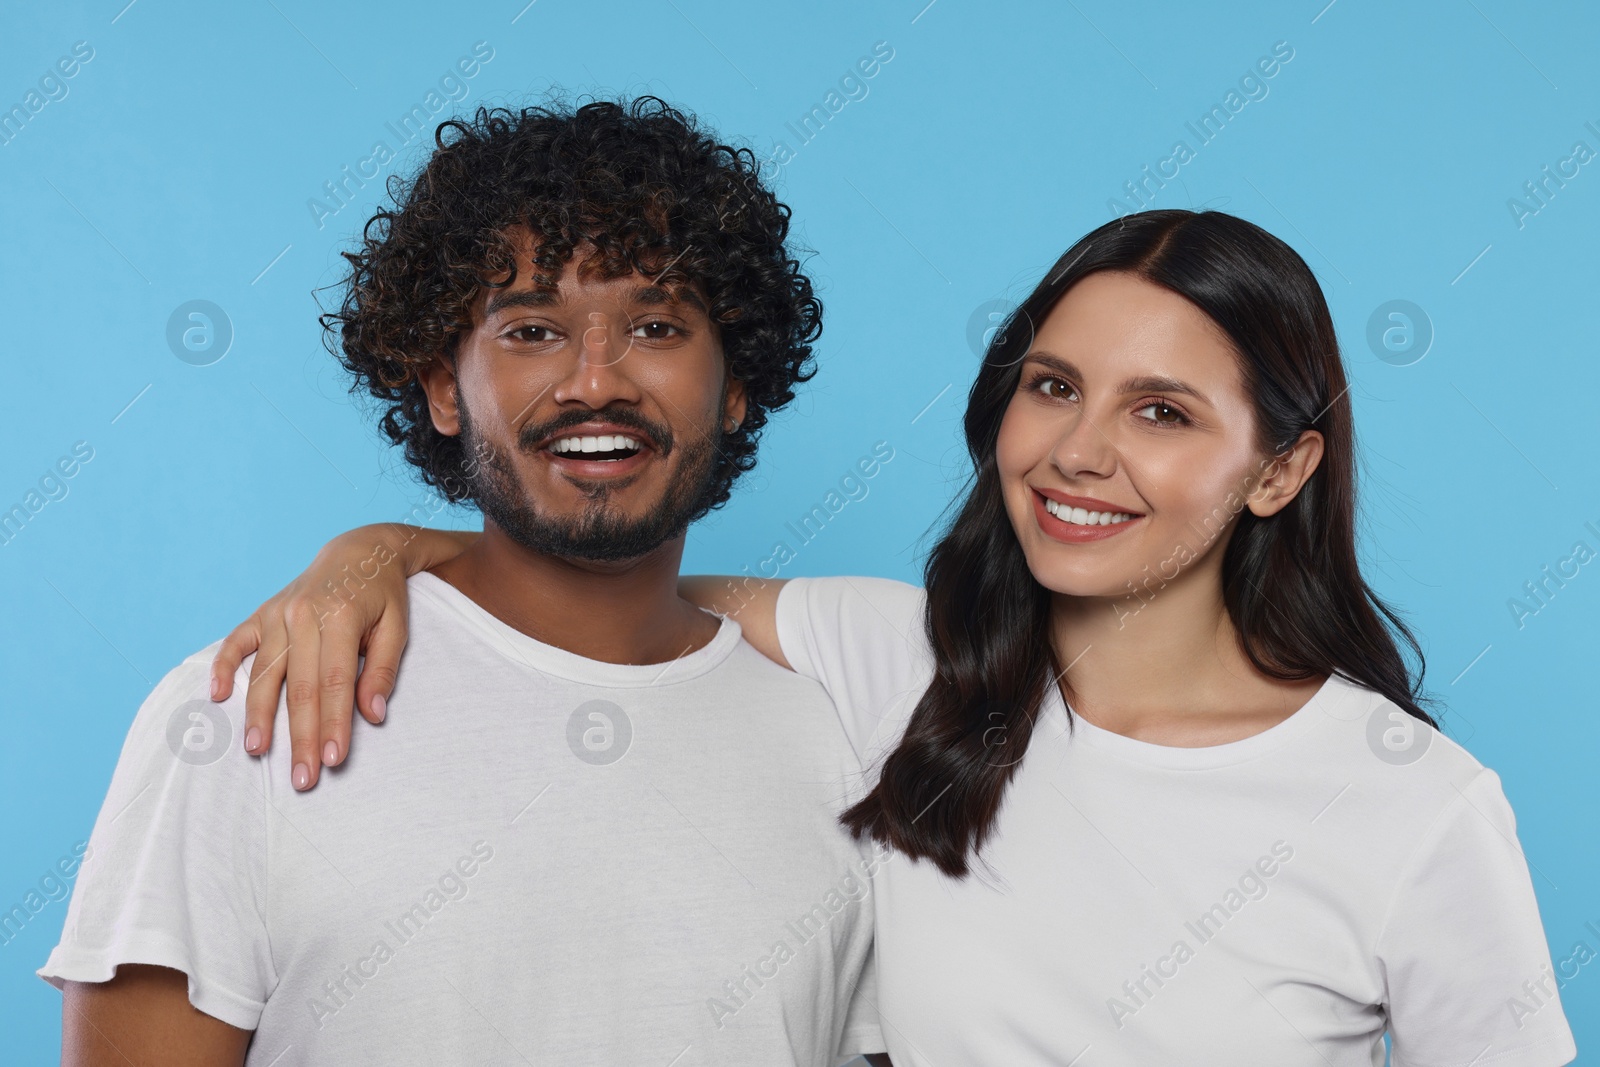 Photo of International dating. Portrait of happy couple on light blue background